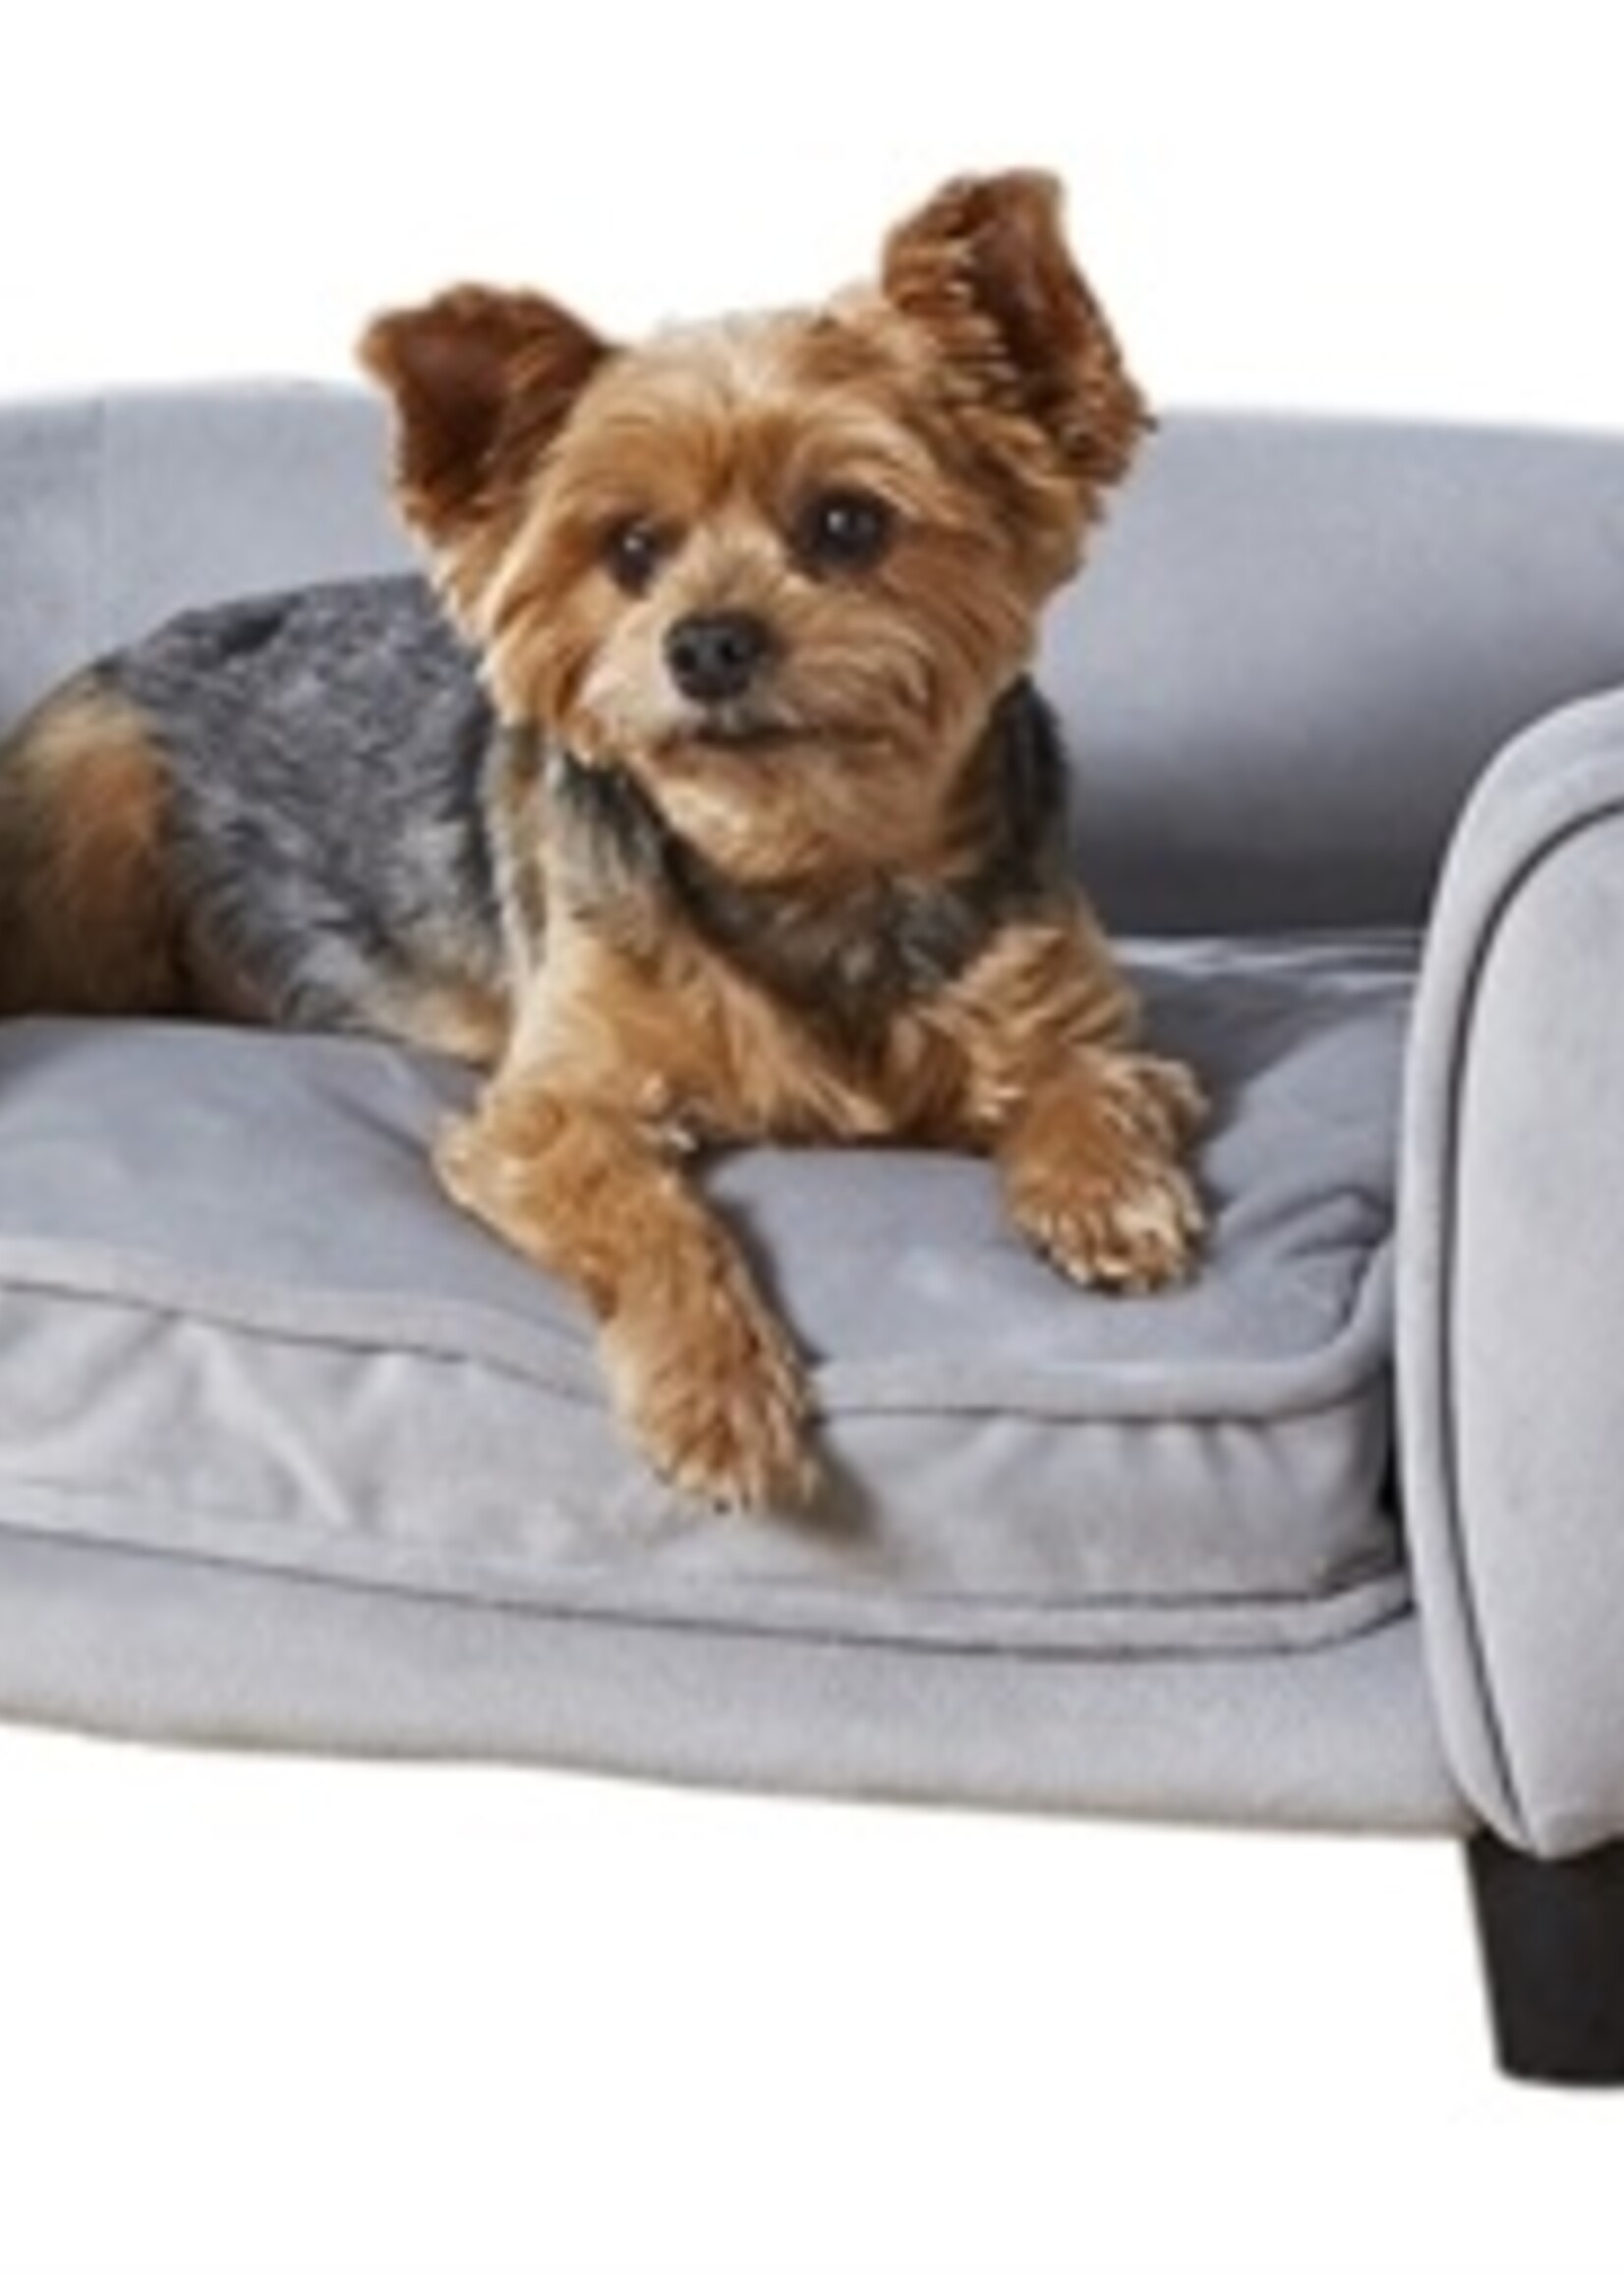 Enchanted pet Enchanted hondenmand / sofa coco lichtgrijs